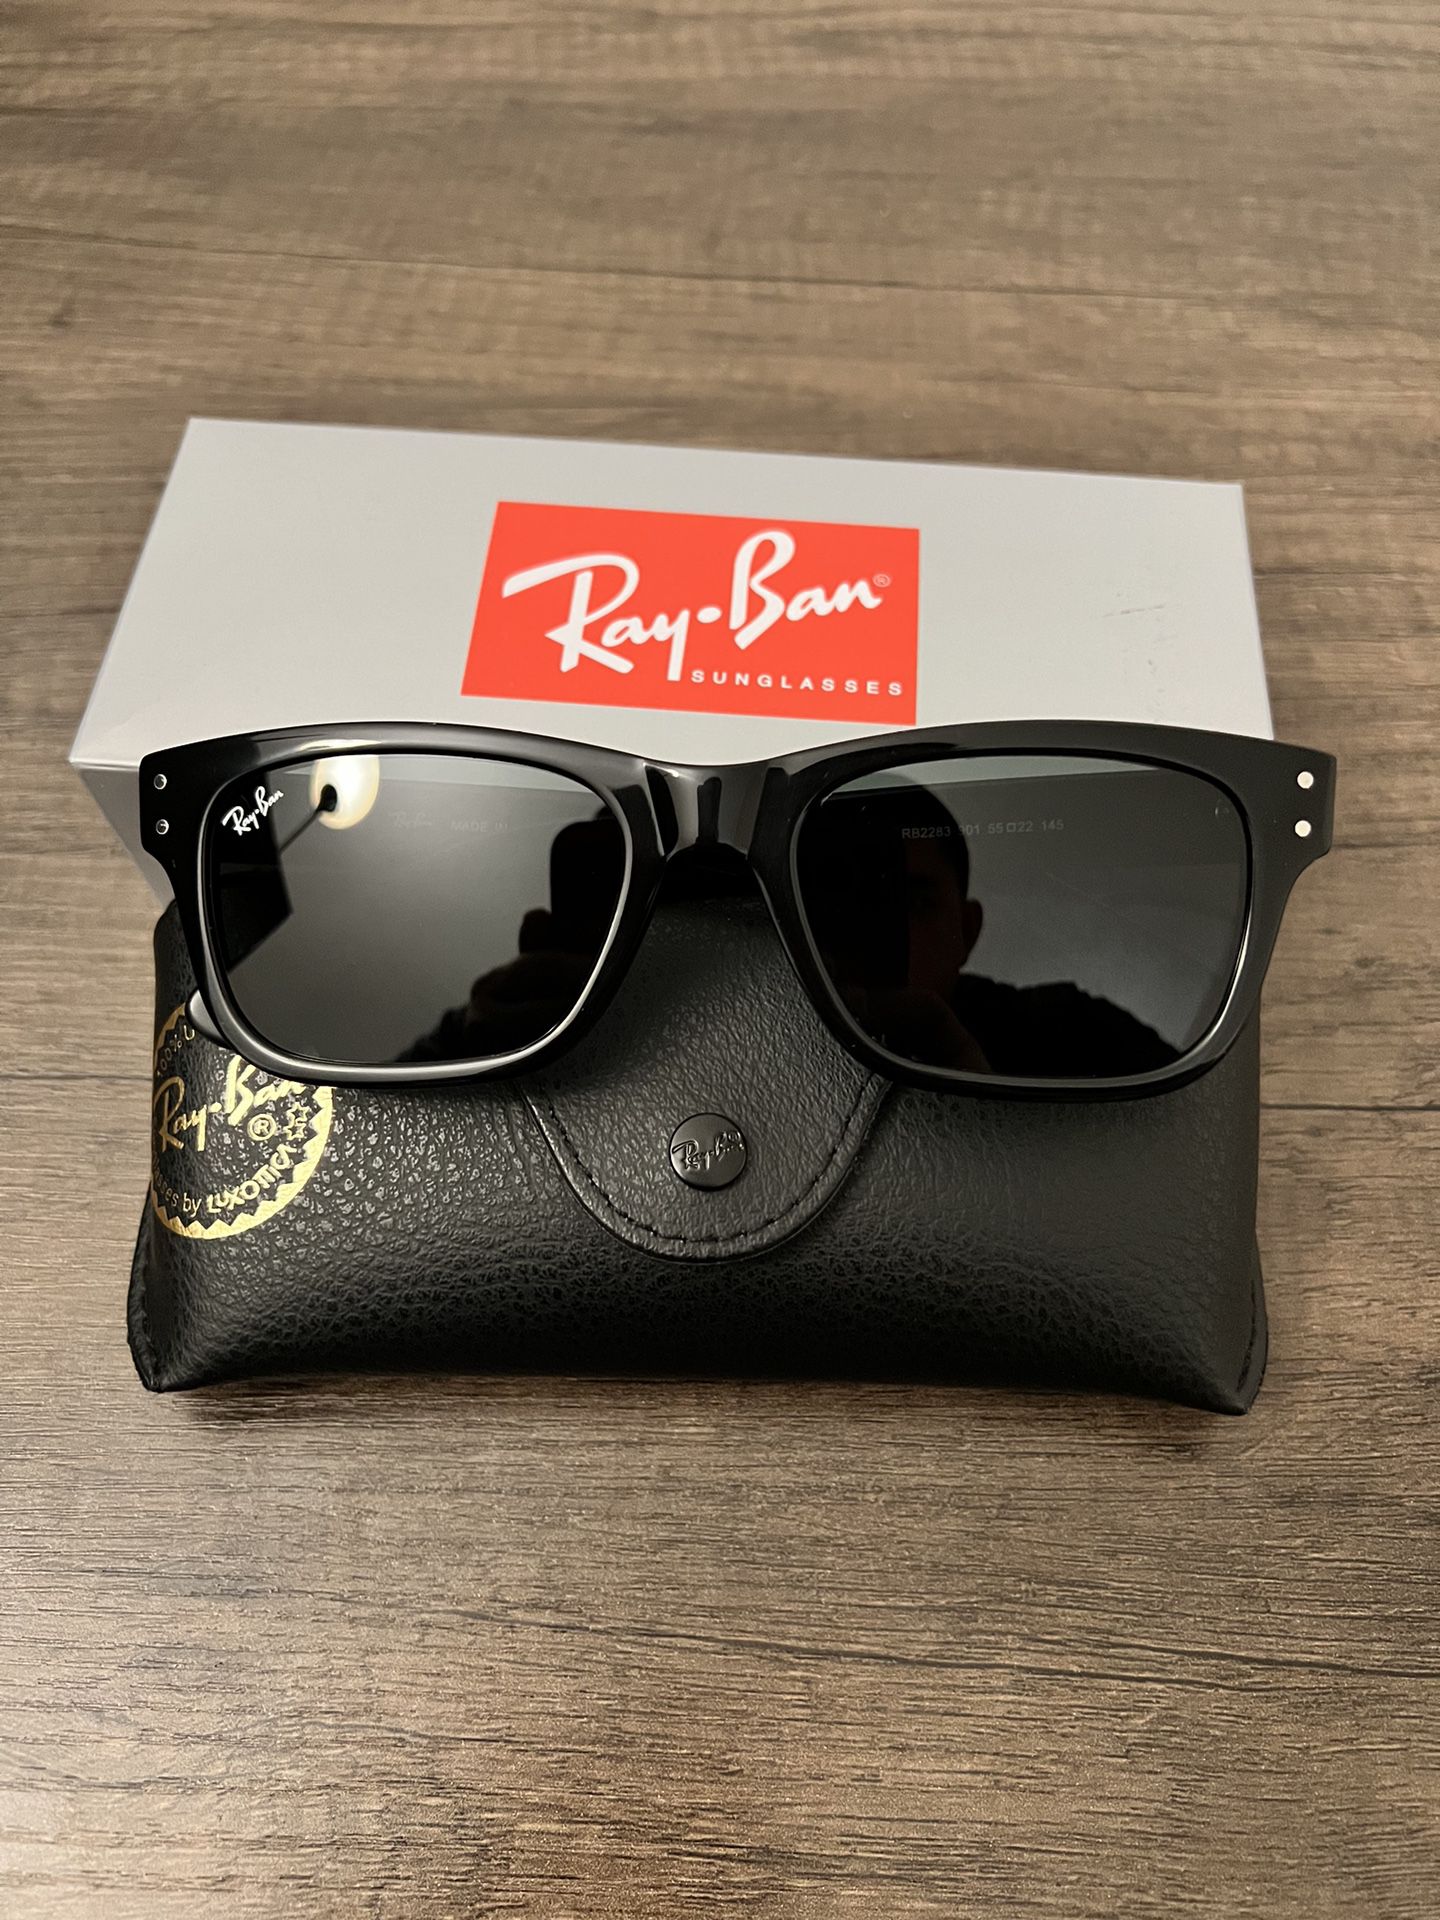 Burbank NEW RayBan Sunglasses with original Ray Ban Packaging 